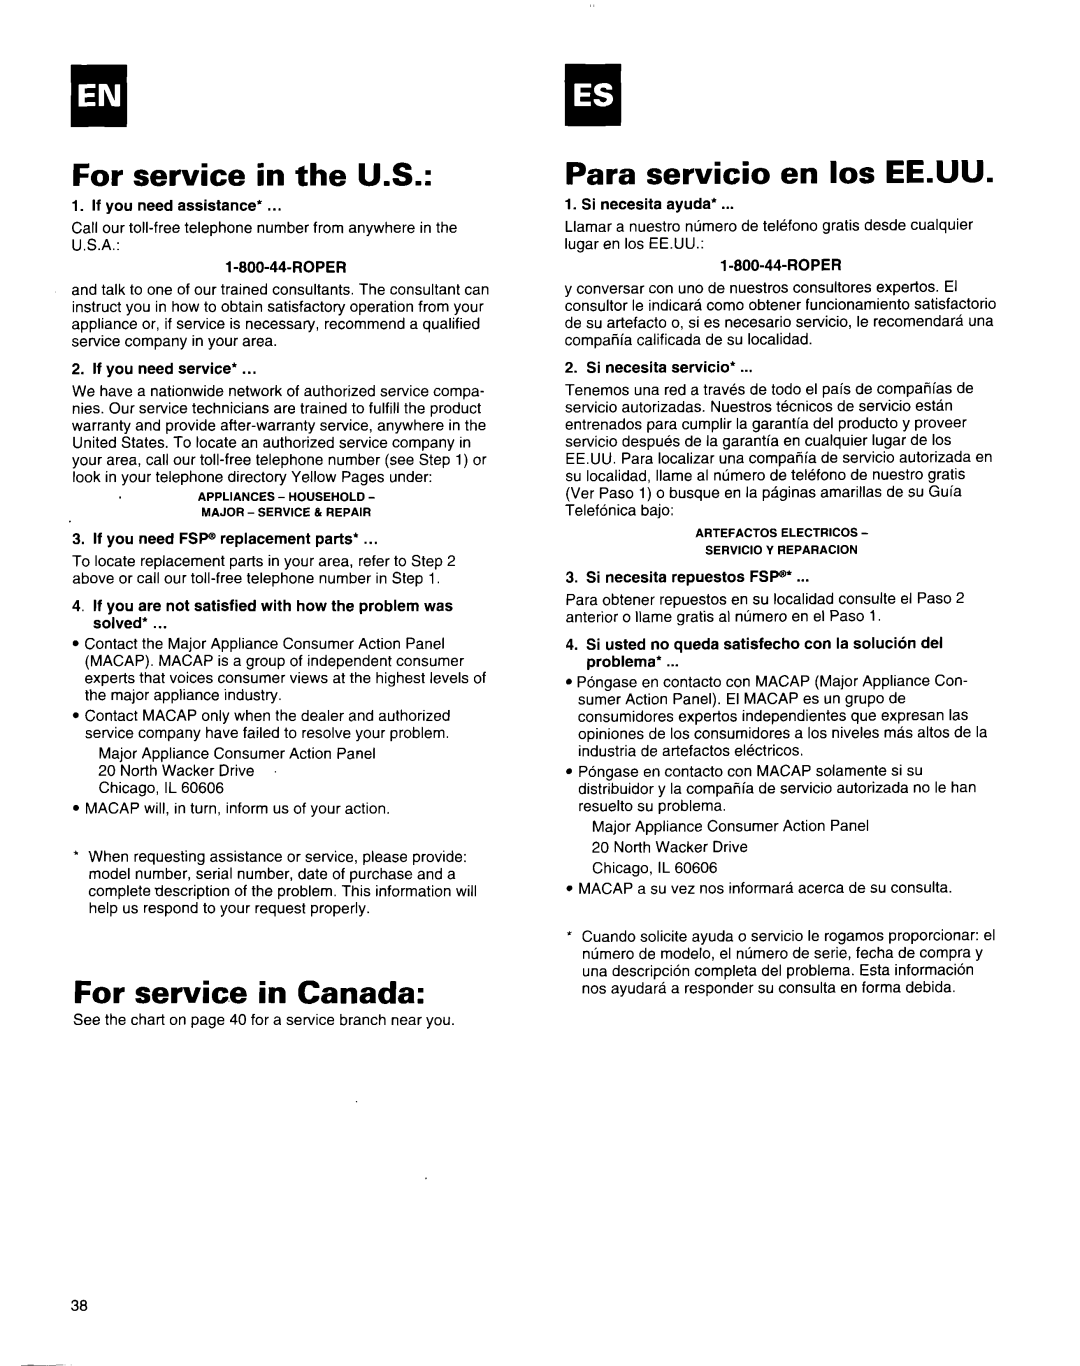 Whirlpool X18004D00 manual For service in the U.S, For servic.e in Canada, Para servicio en 10s EE.UU 